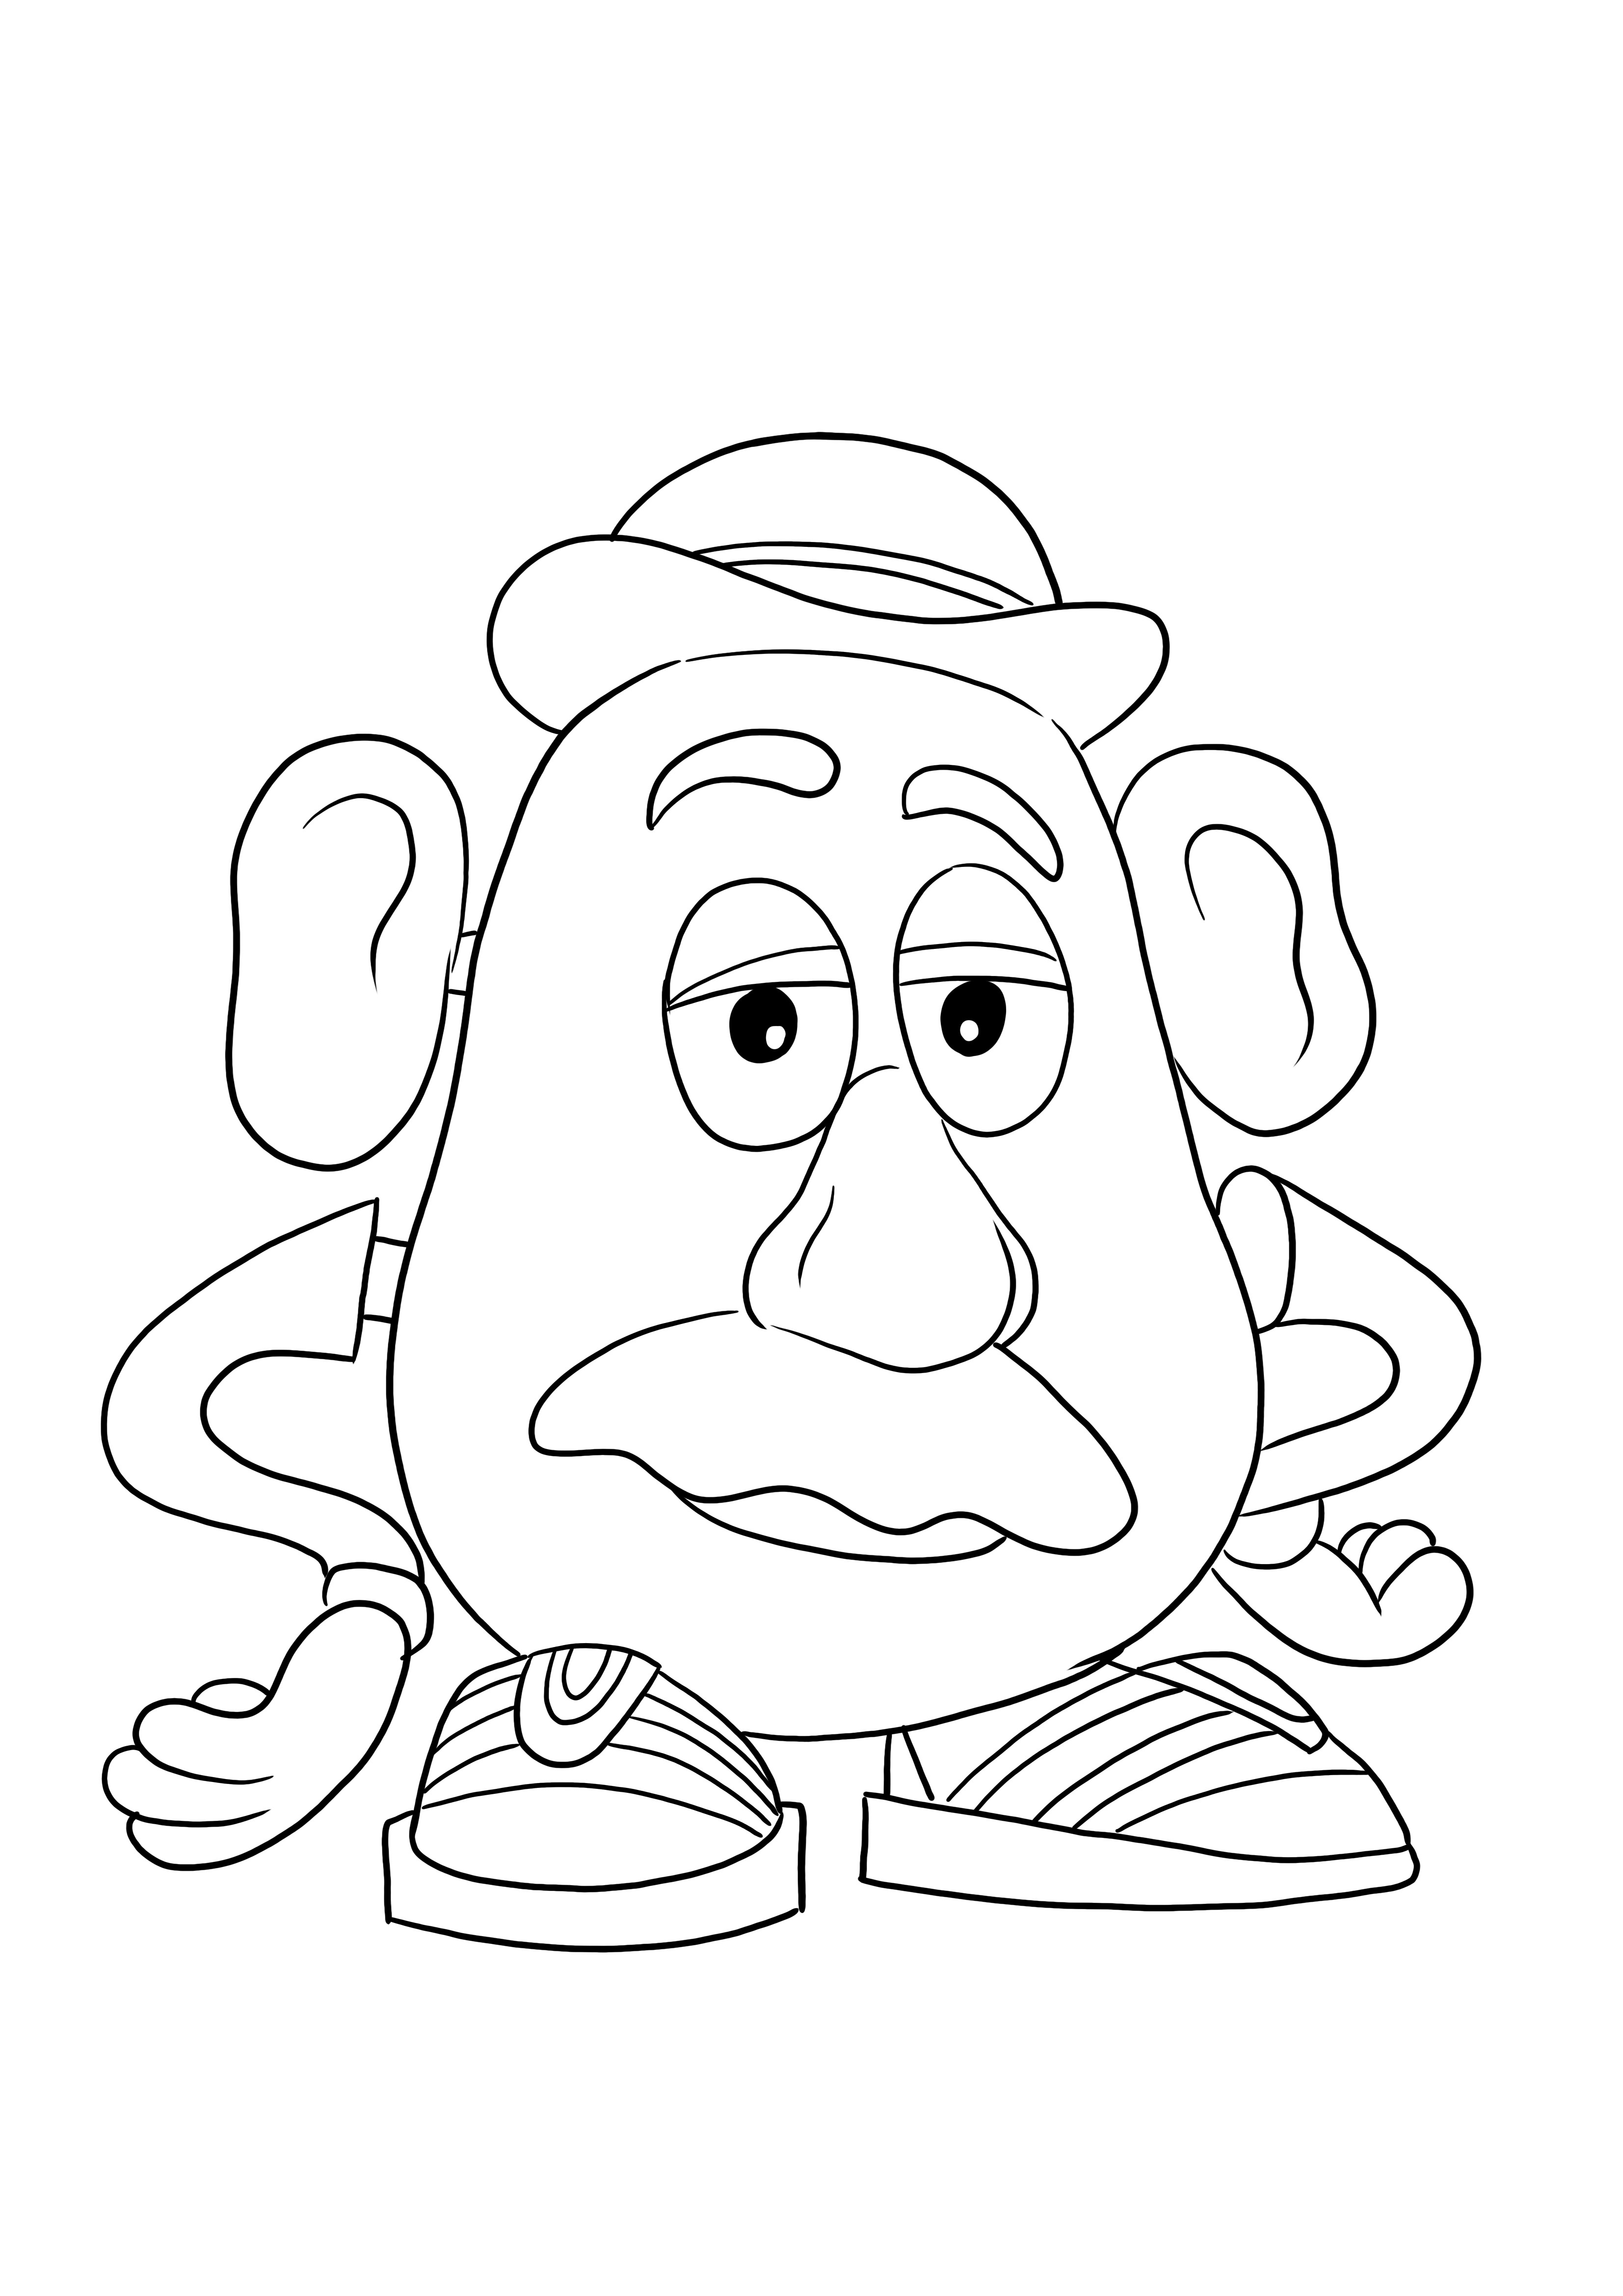 Mister Potato Head gratis untuk mengunduh gambar agar anak-anak dapat mewarnai dengan mudah